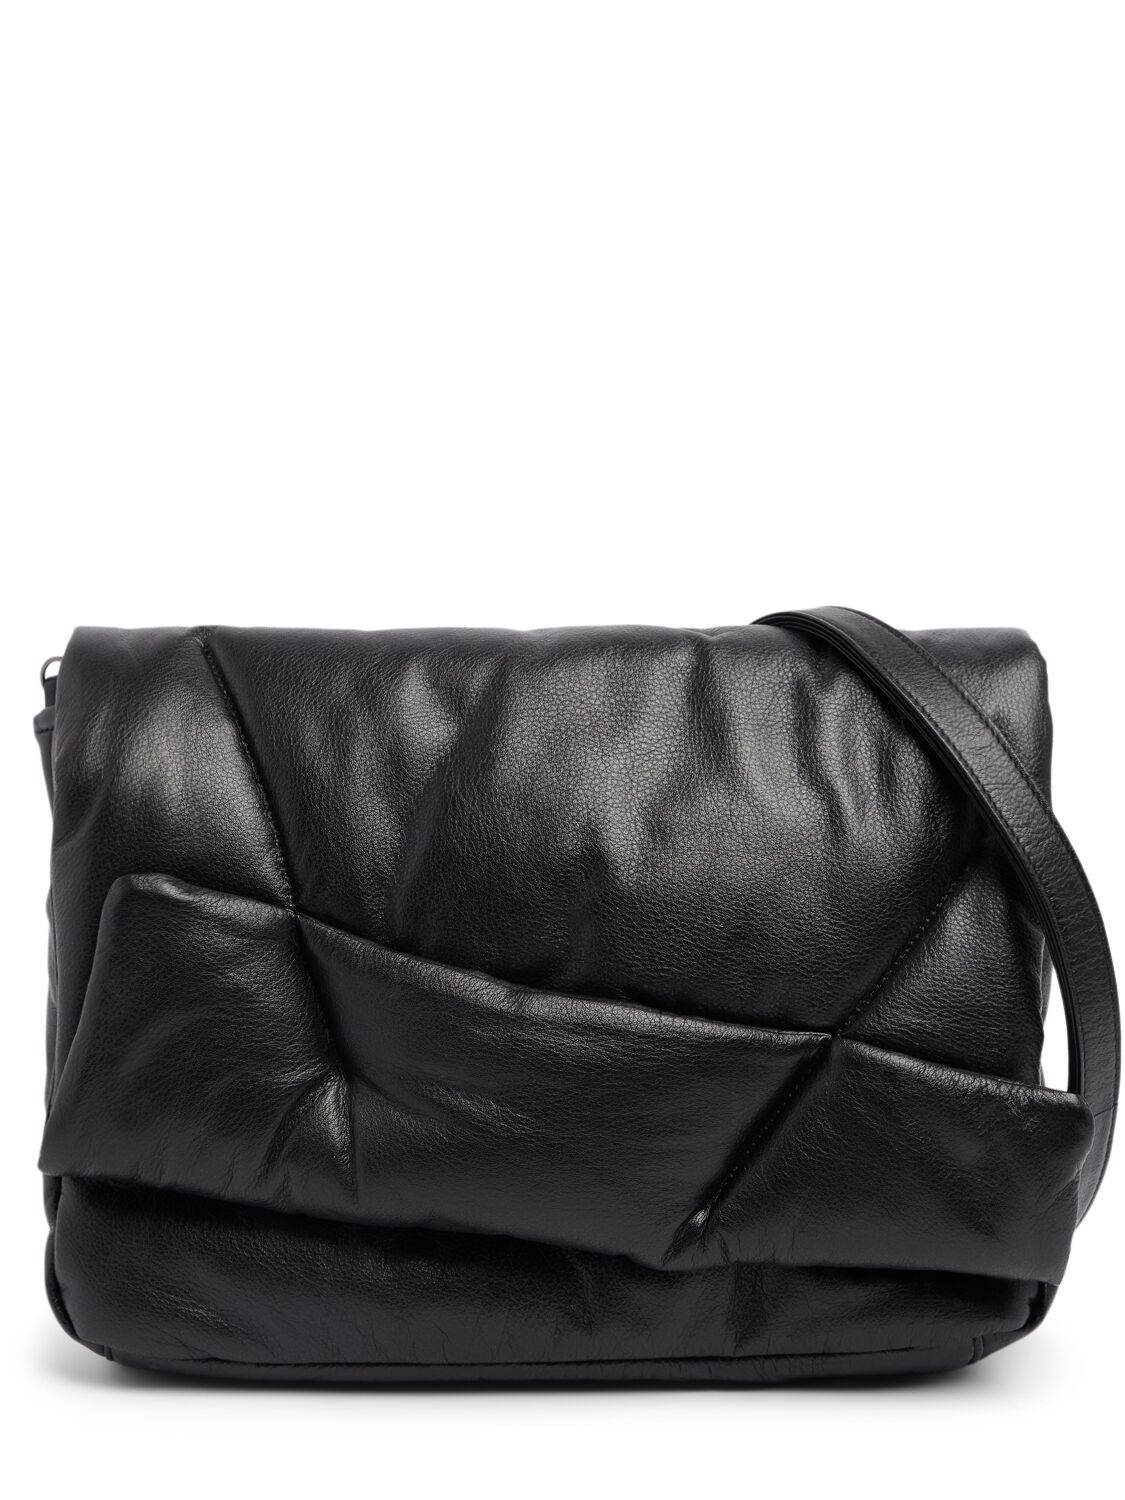 Yohji Yamamoto Medium Quilted Leather Bag In Black